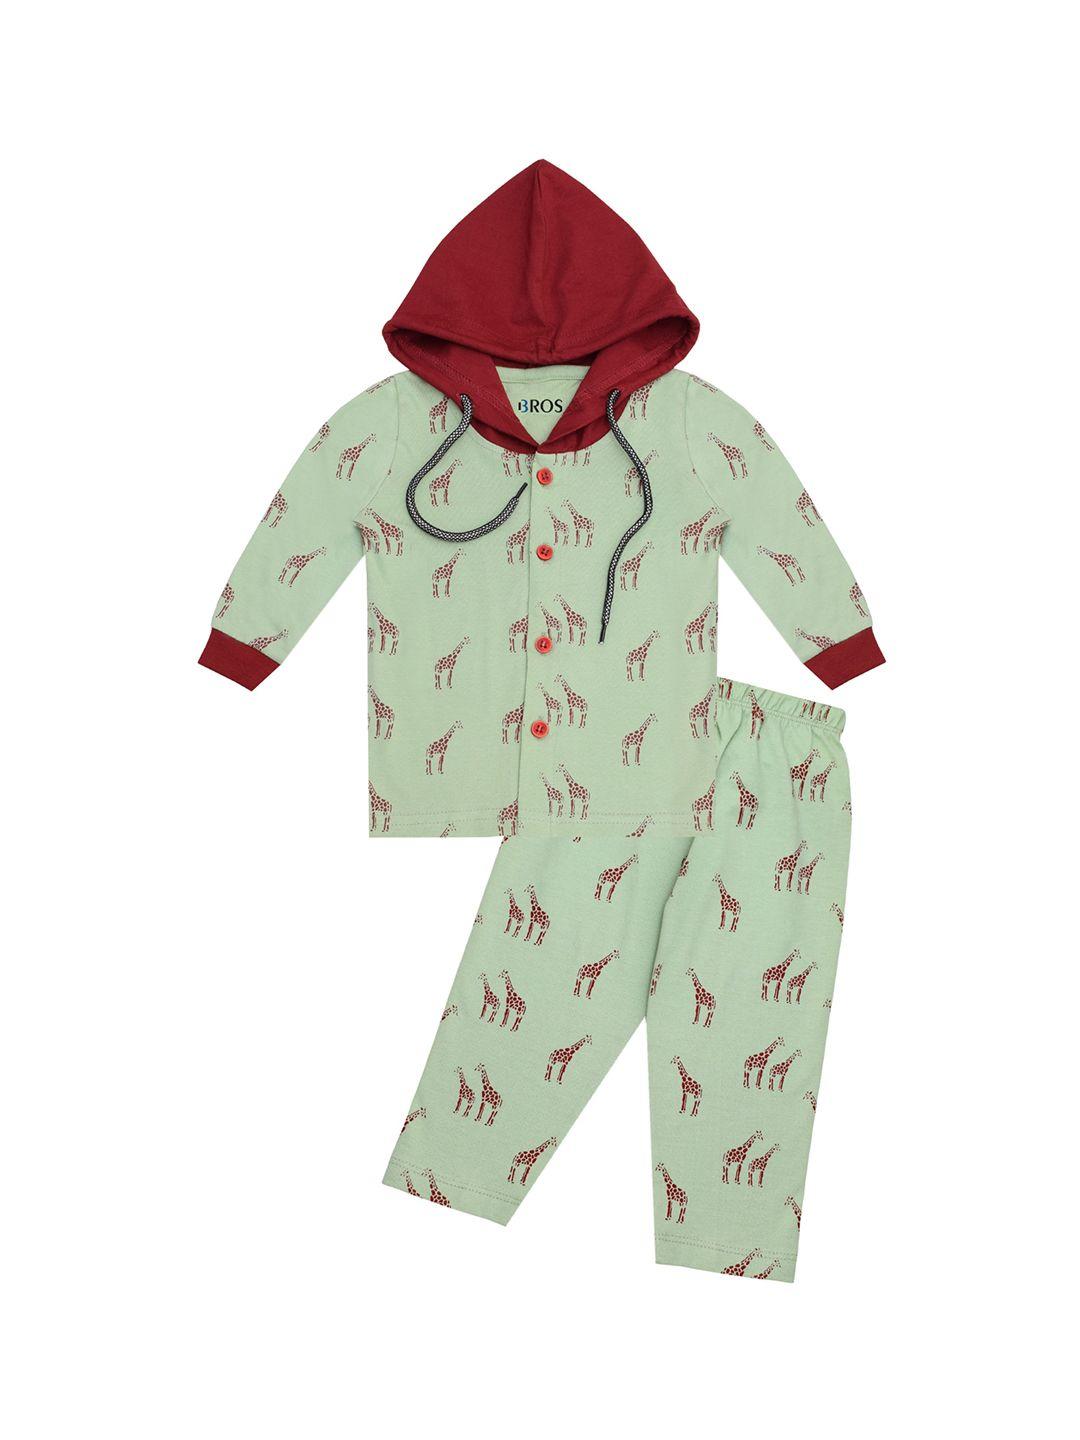 3bros-unisex-kids-olive-green-&-maroon-printed-t-shirt-with-pyjamas